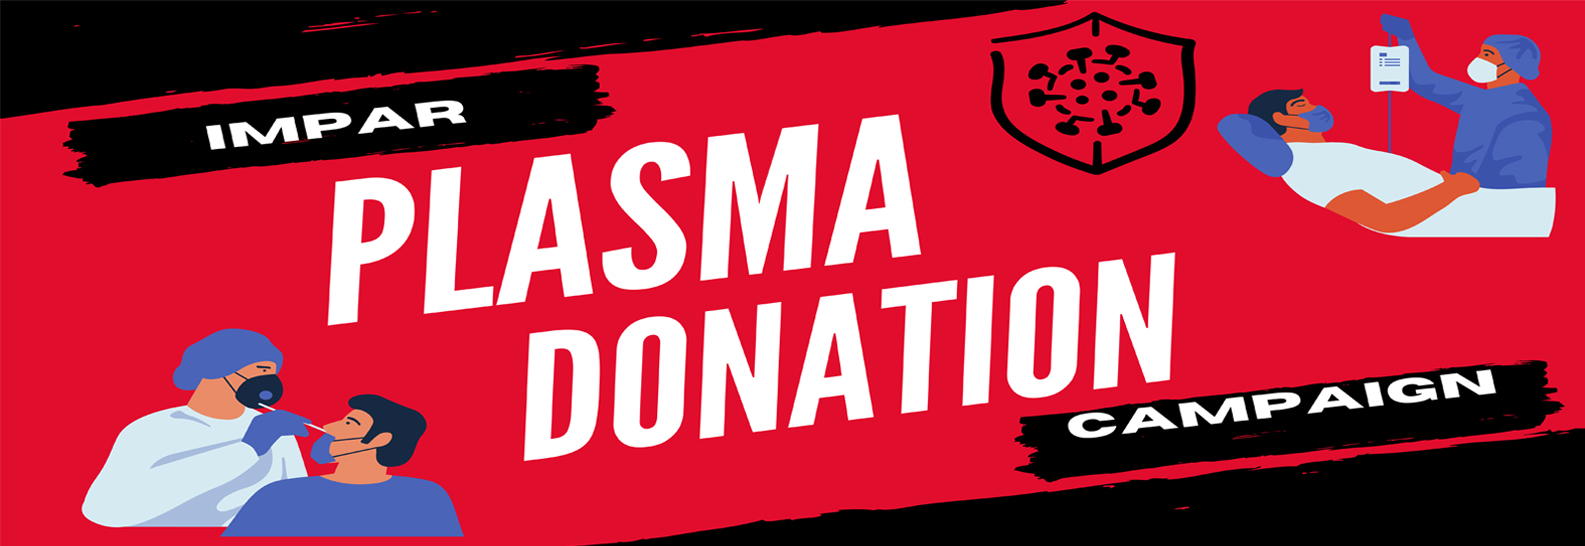 Plasma donation